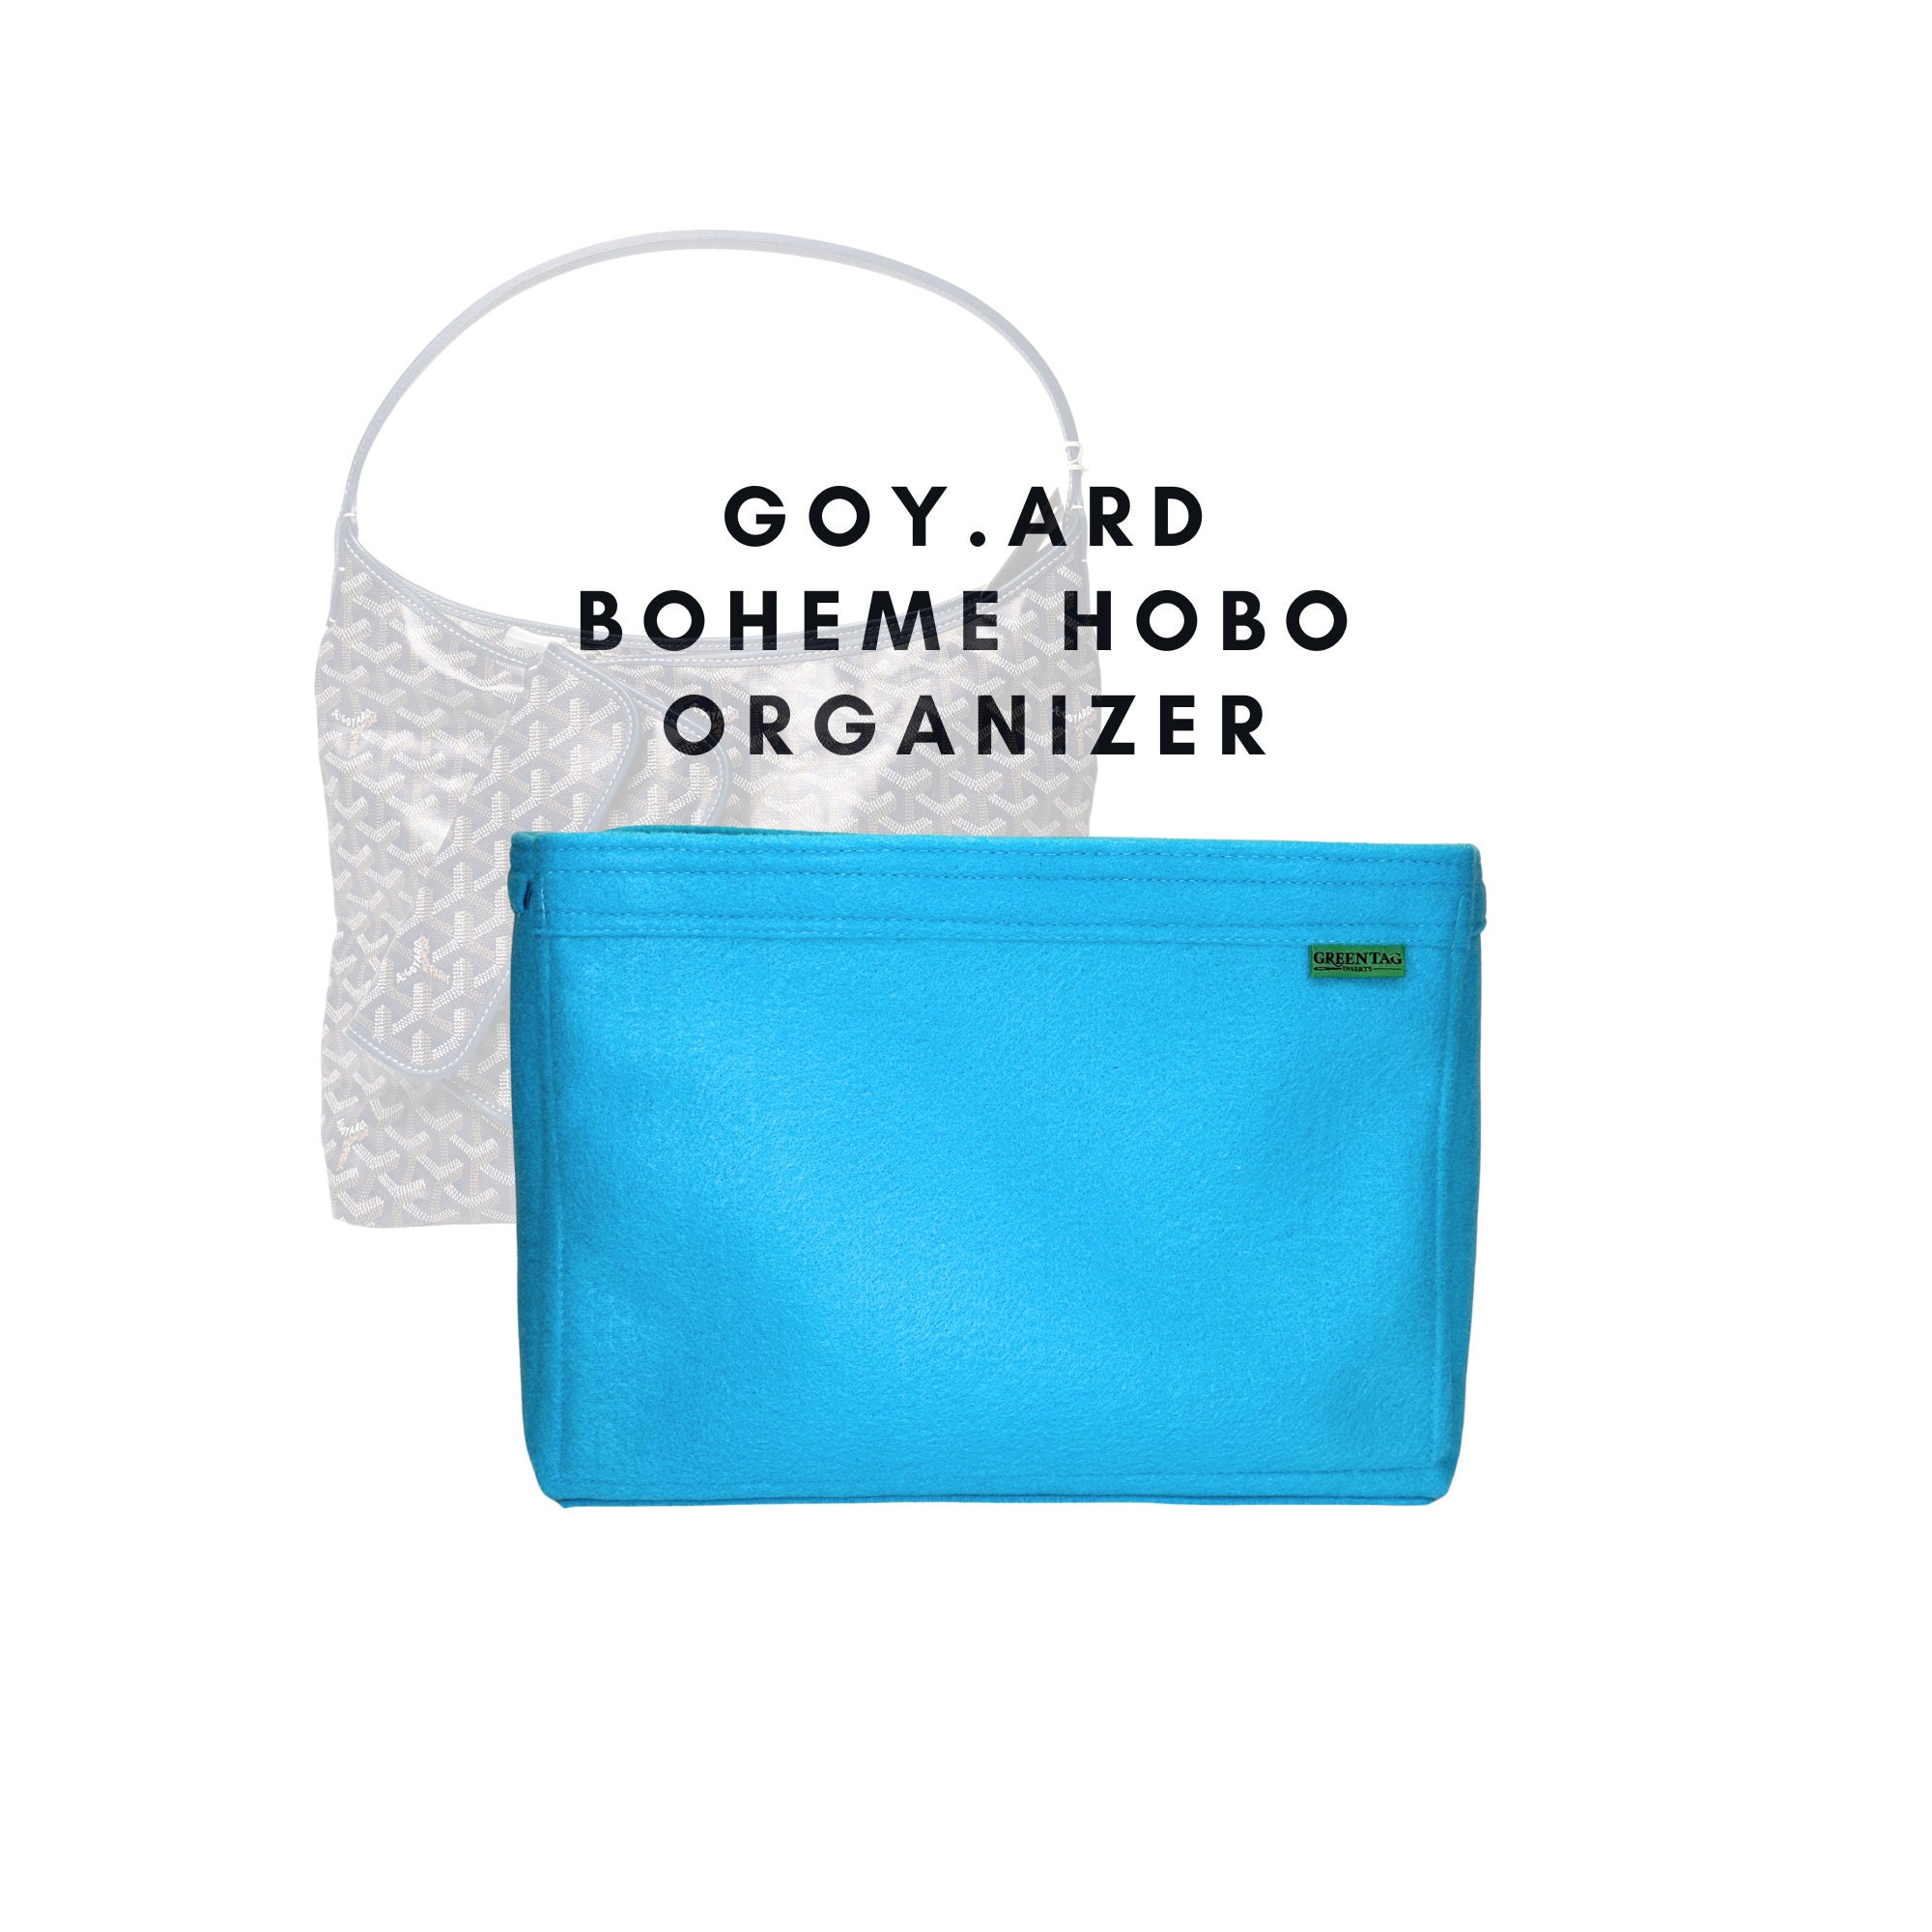 Goyard Bohème Hobo Bag #PM01 – TasBatam168